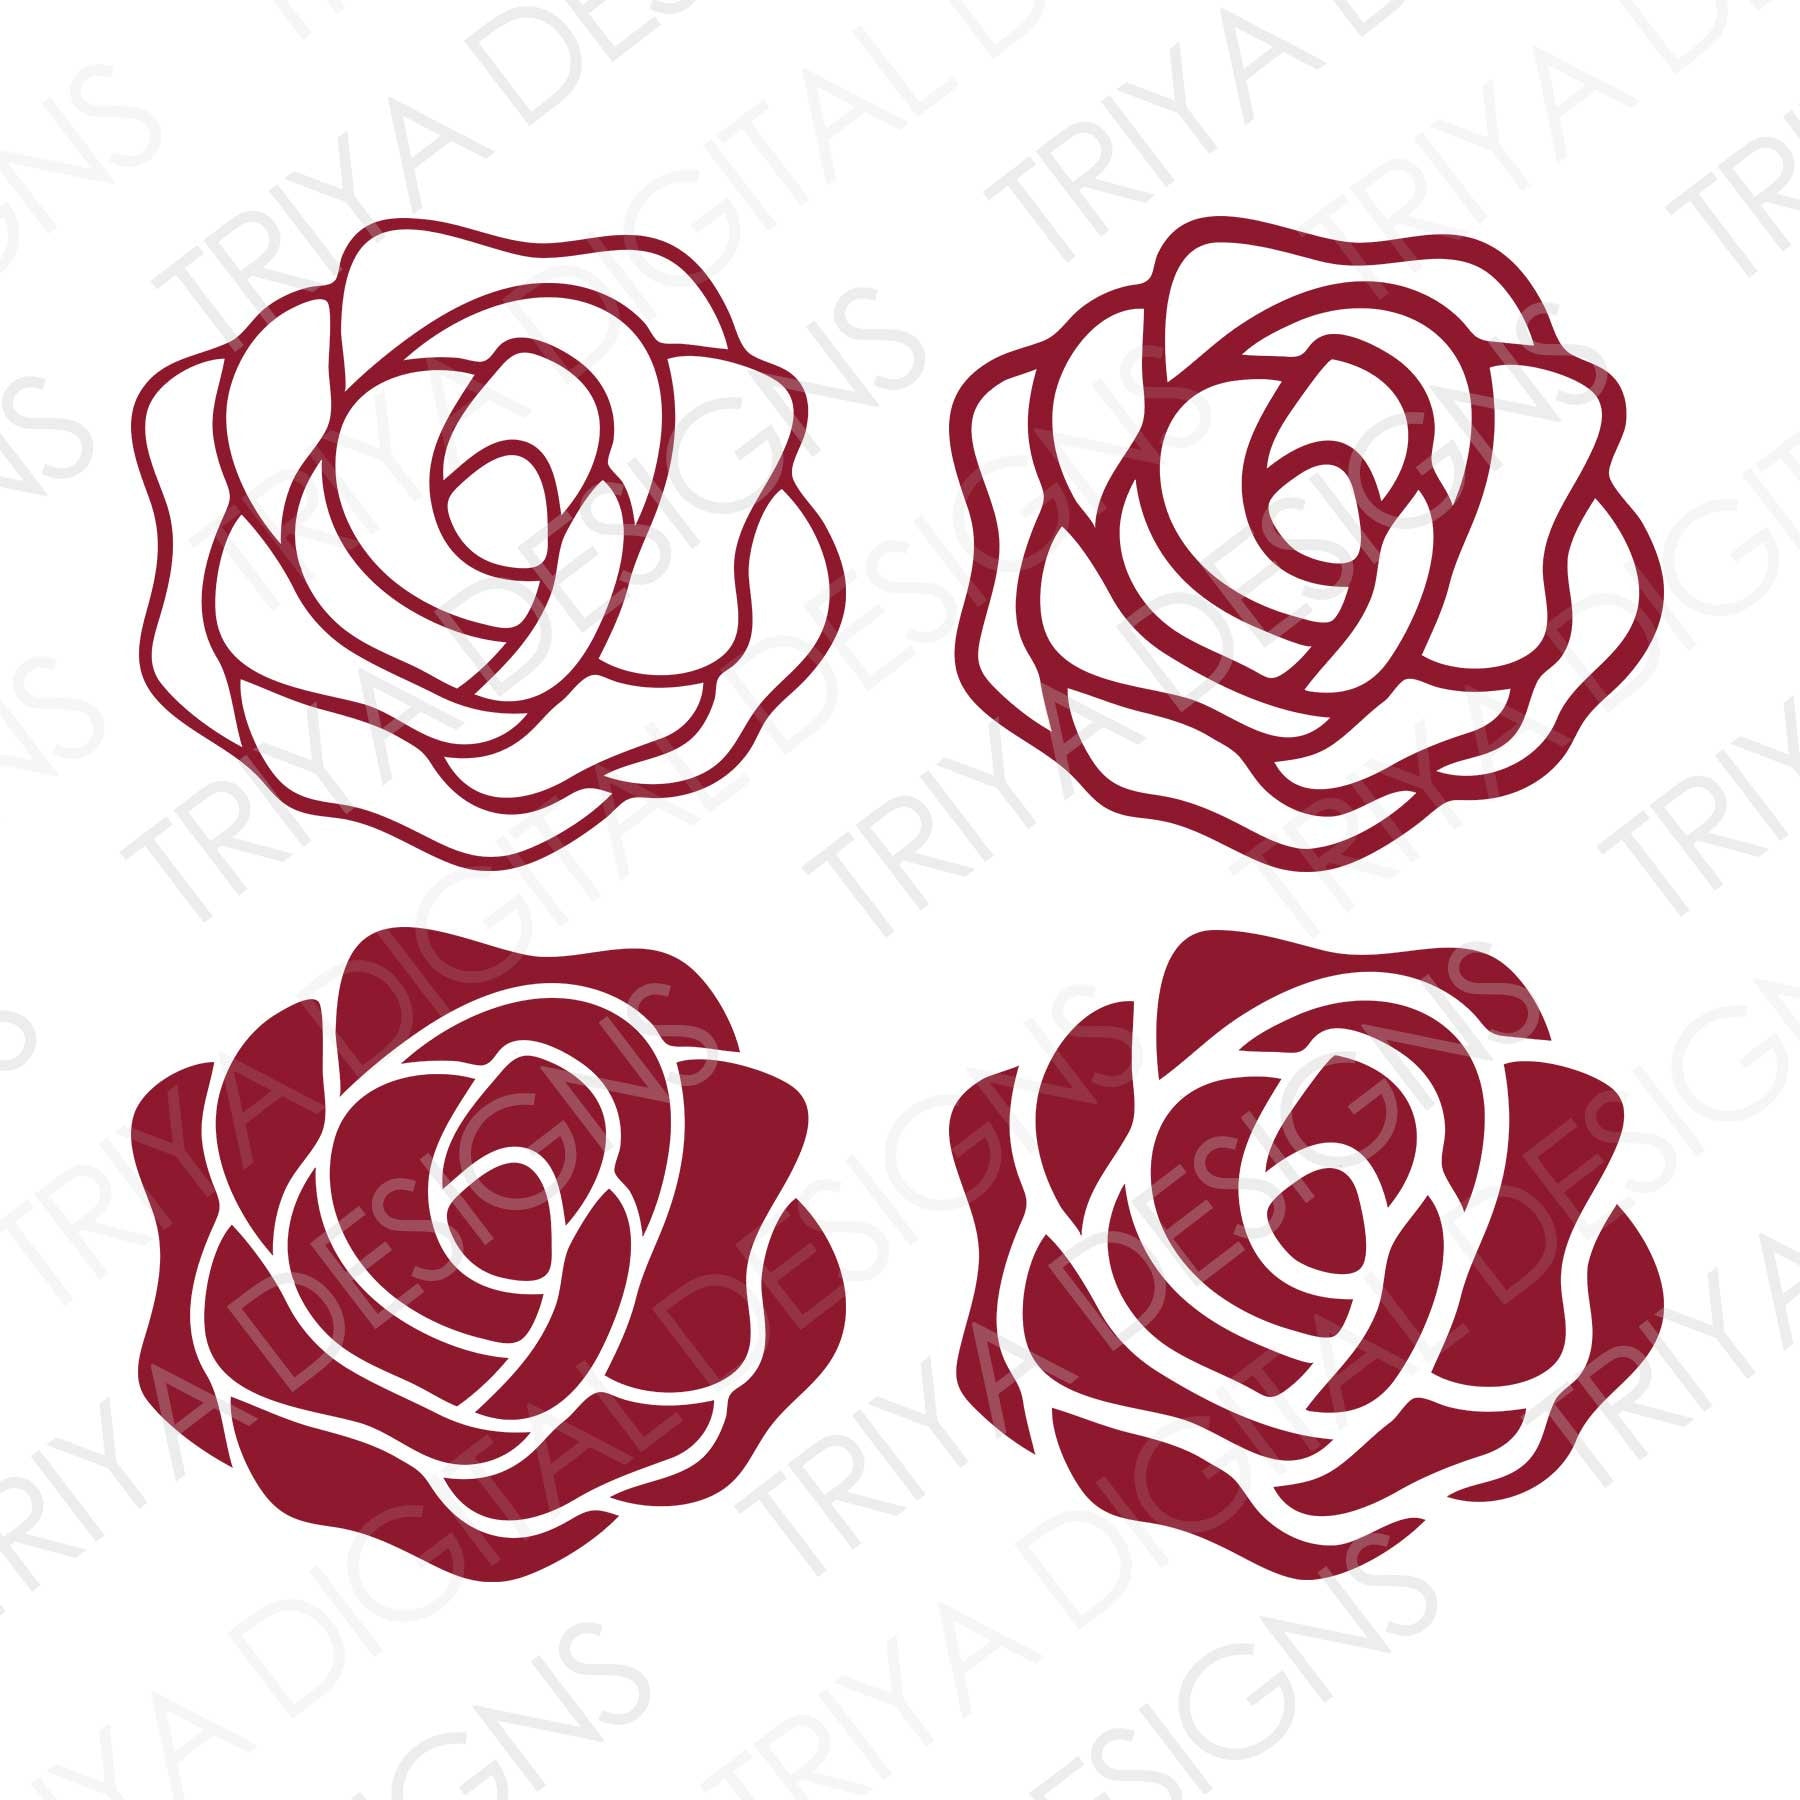 File:Rose flower.svg - Wikipedia